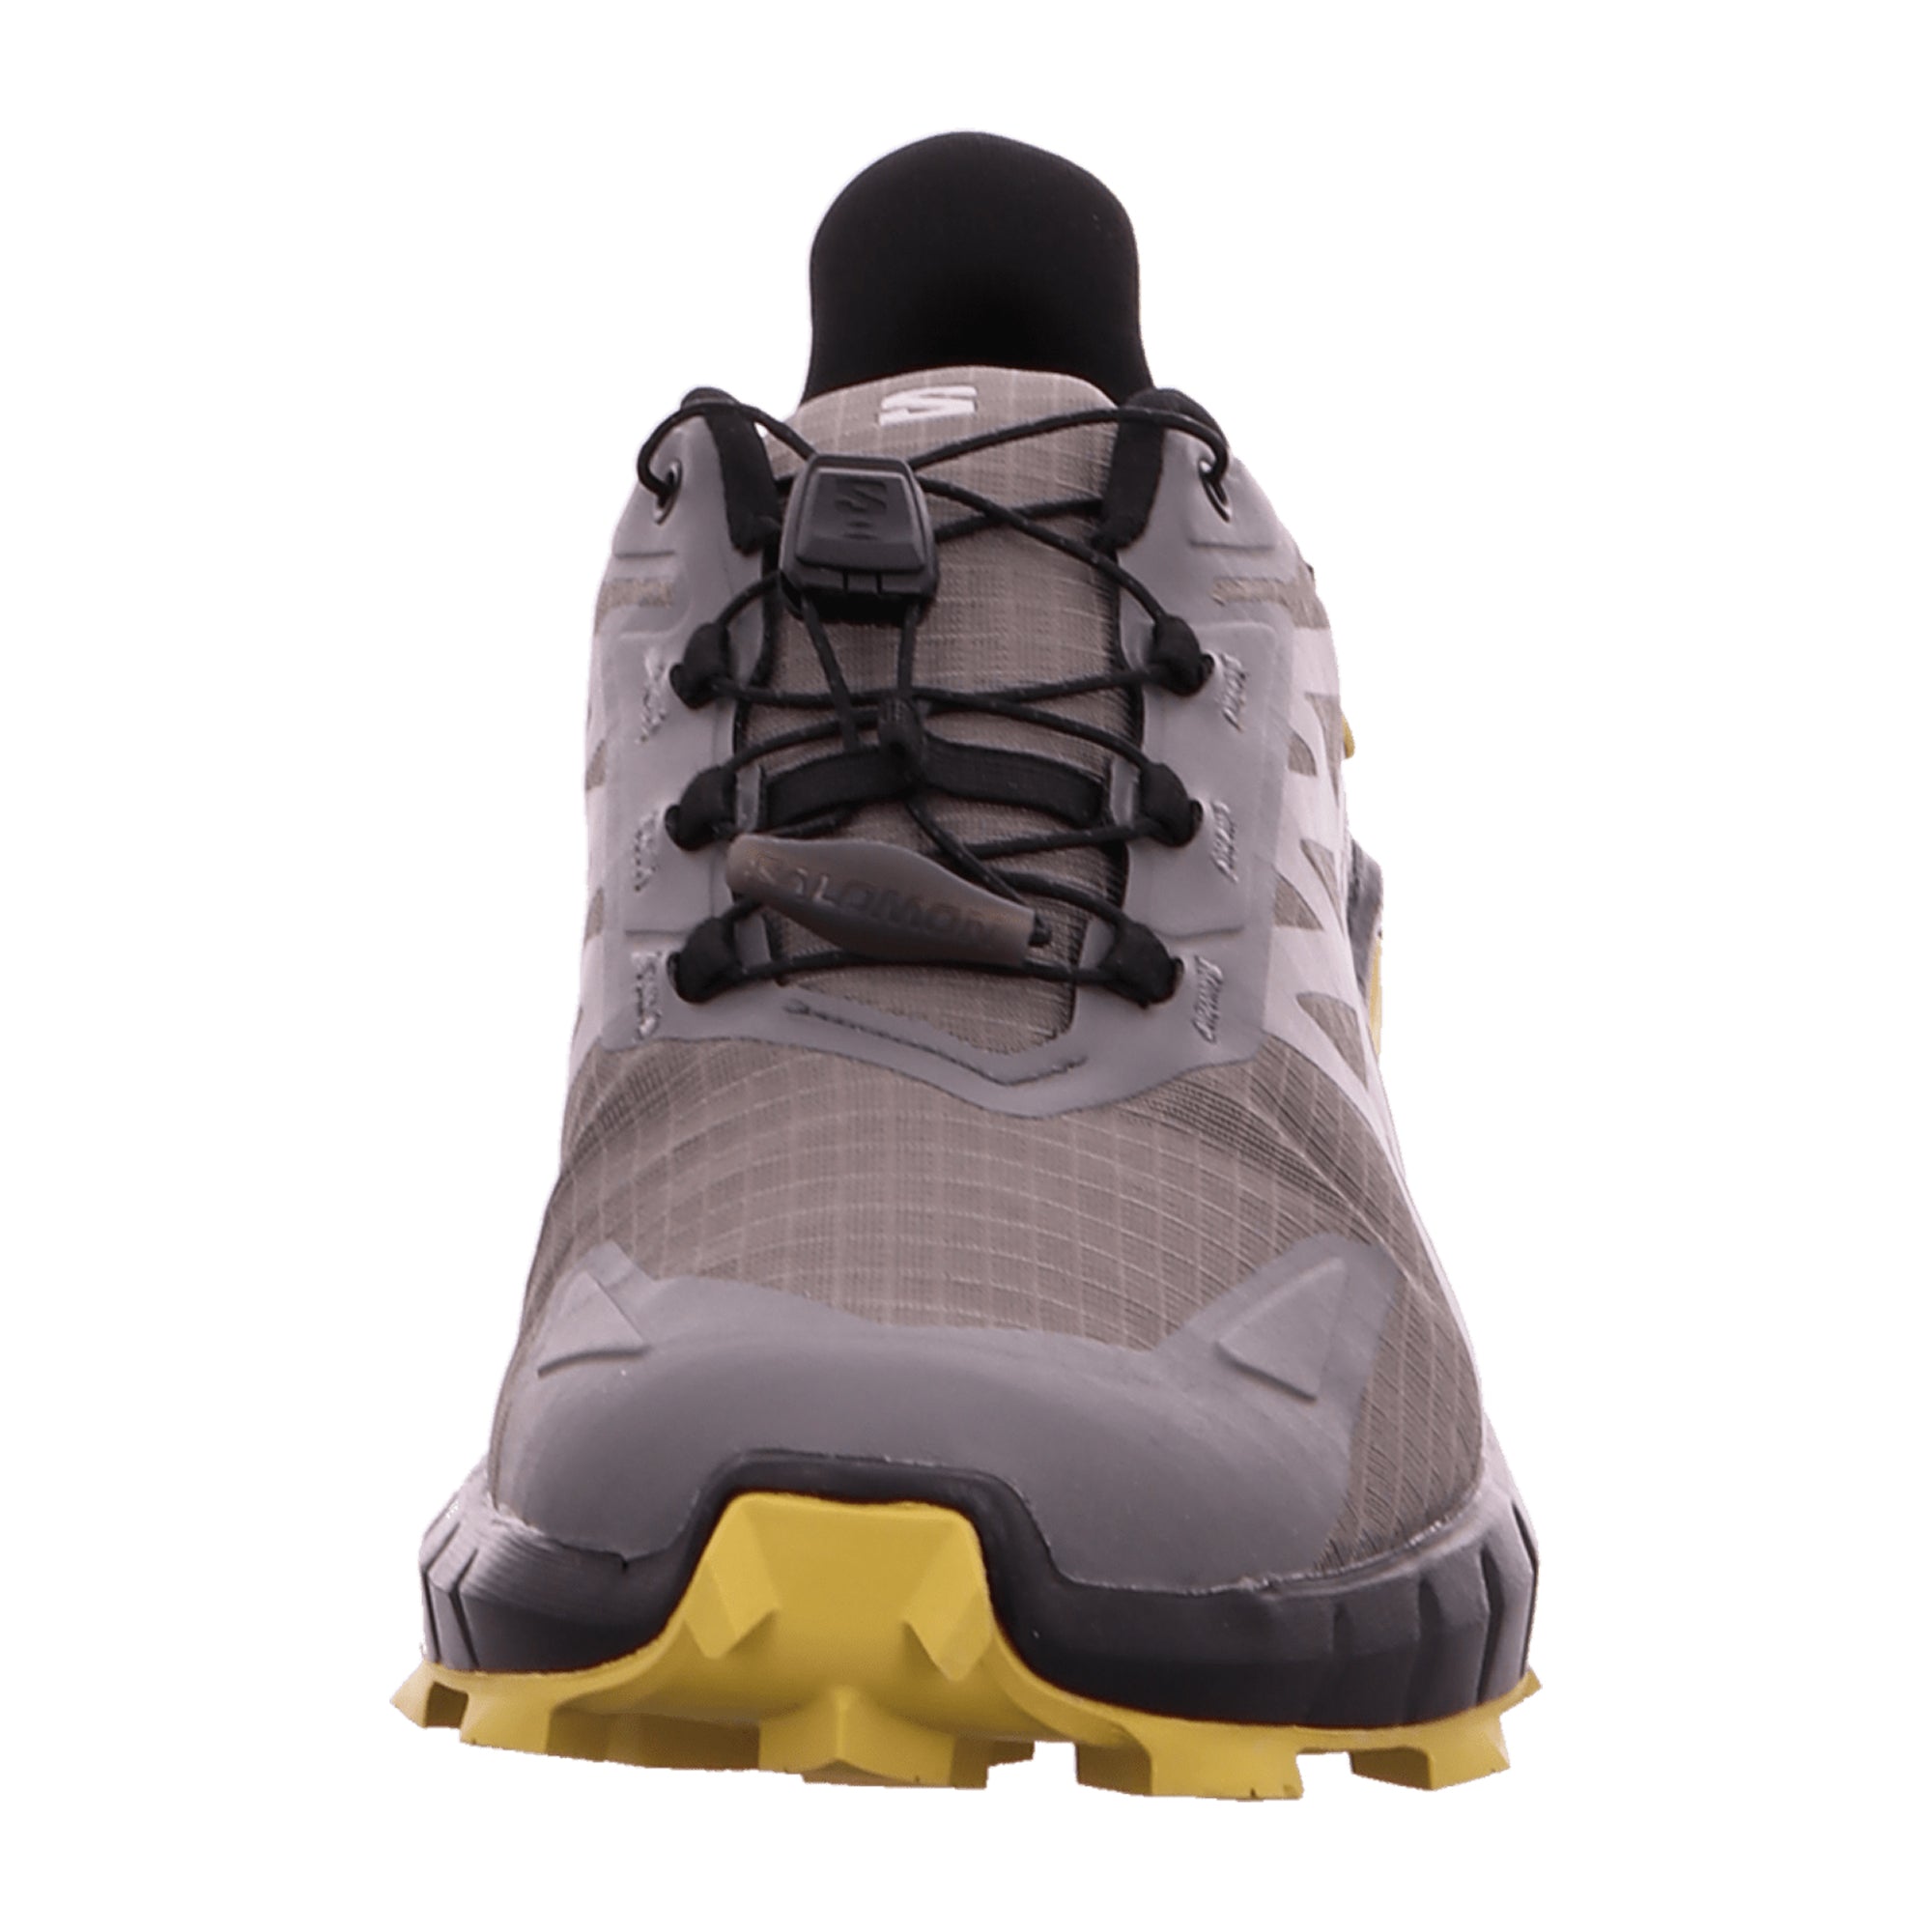 Salomon Supercross 4 GTX for men, gray, shoes